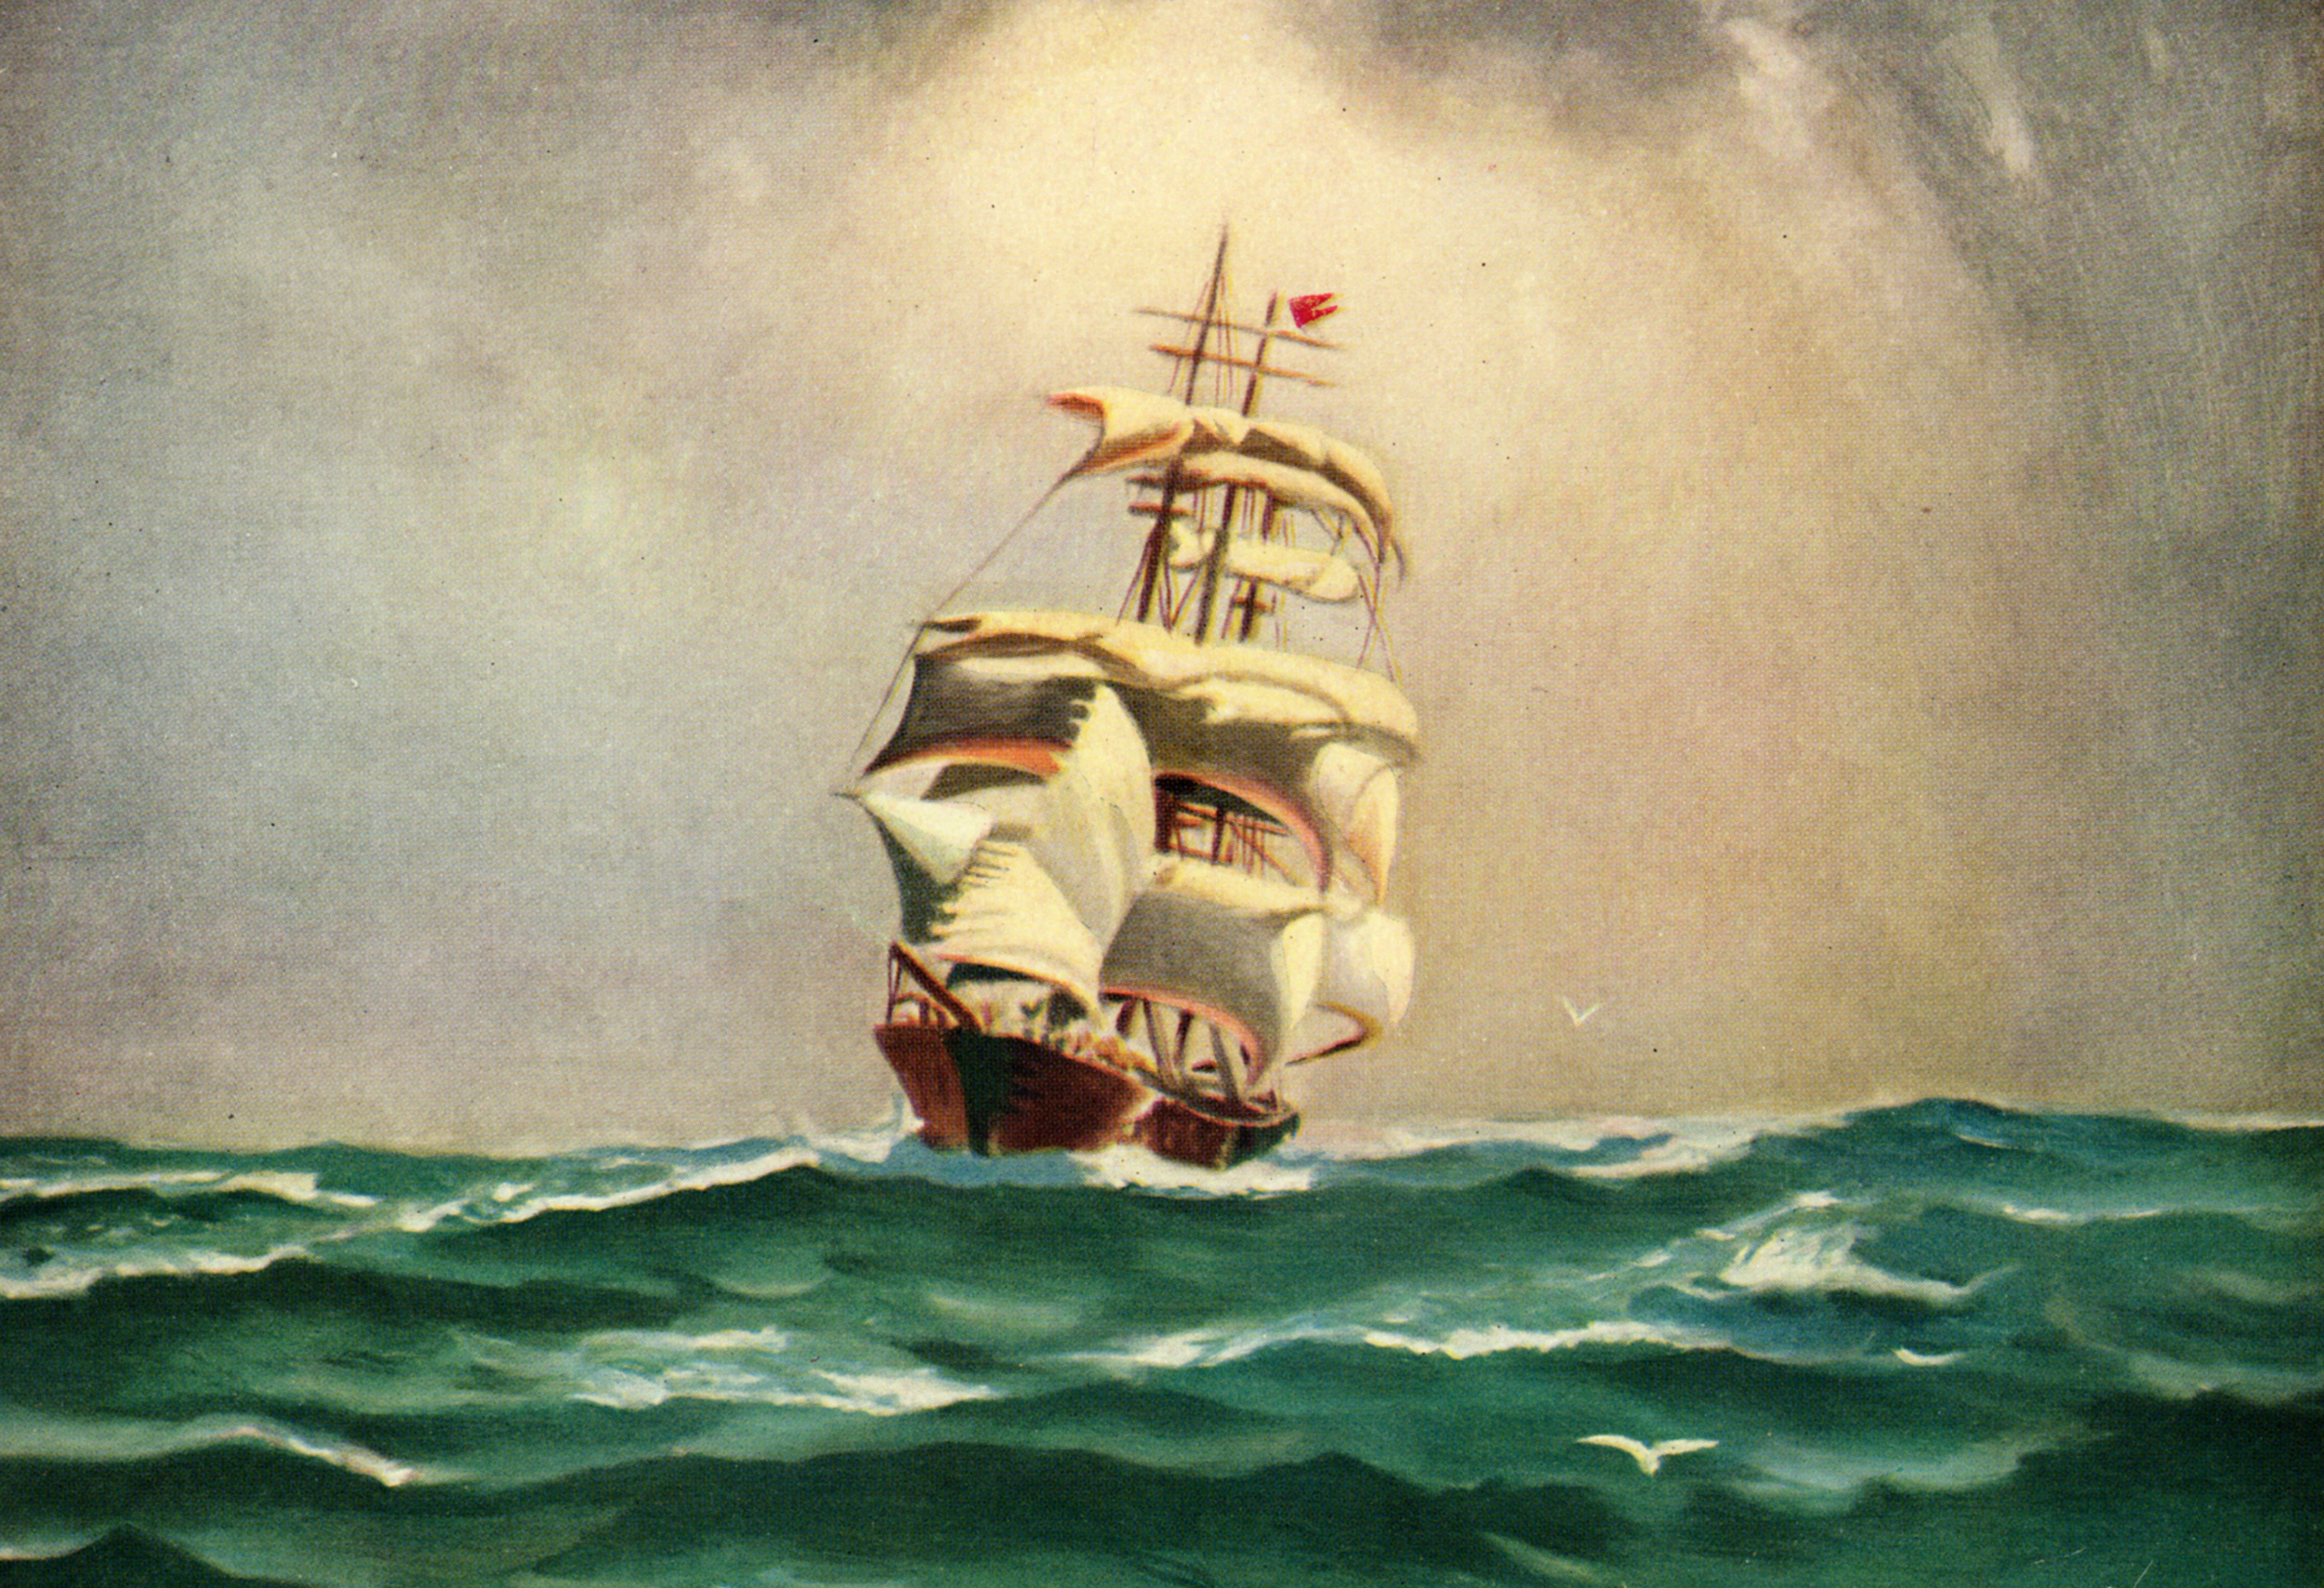 Vintage calendar art of ships, boats, marine scenes